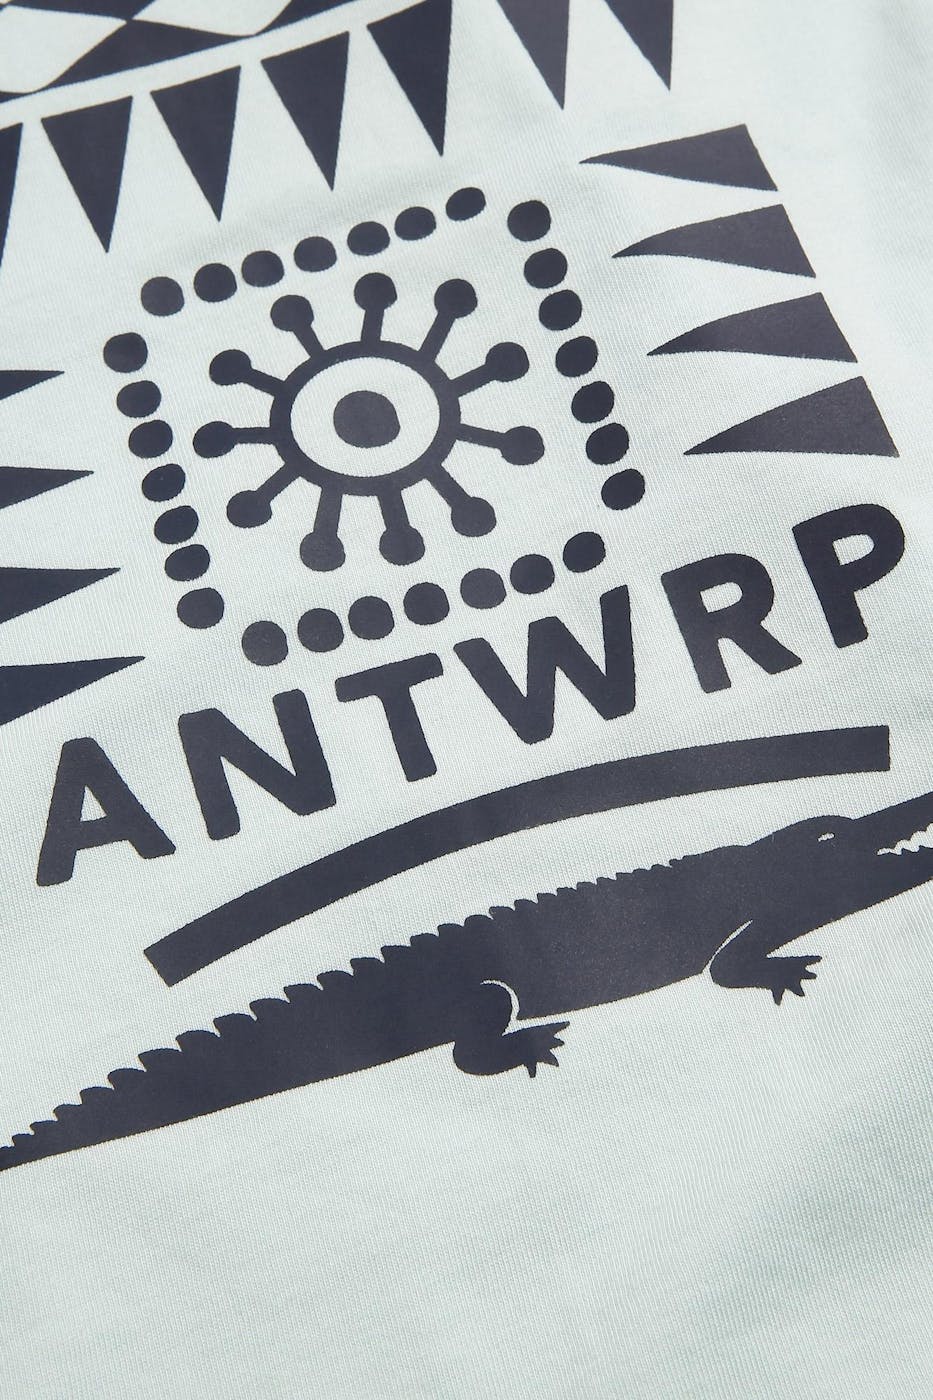 Antwrp - Muntgroene Outdoor Adventure T-shirt